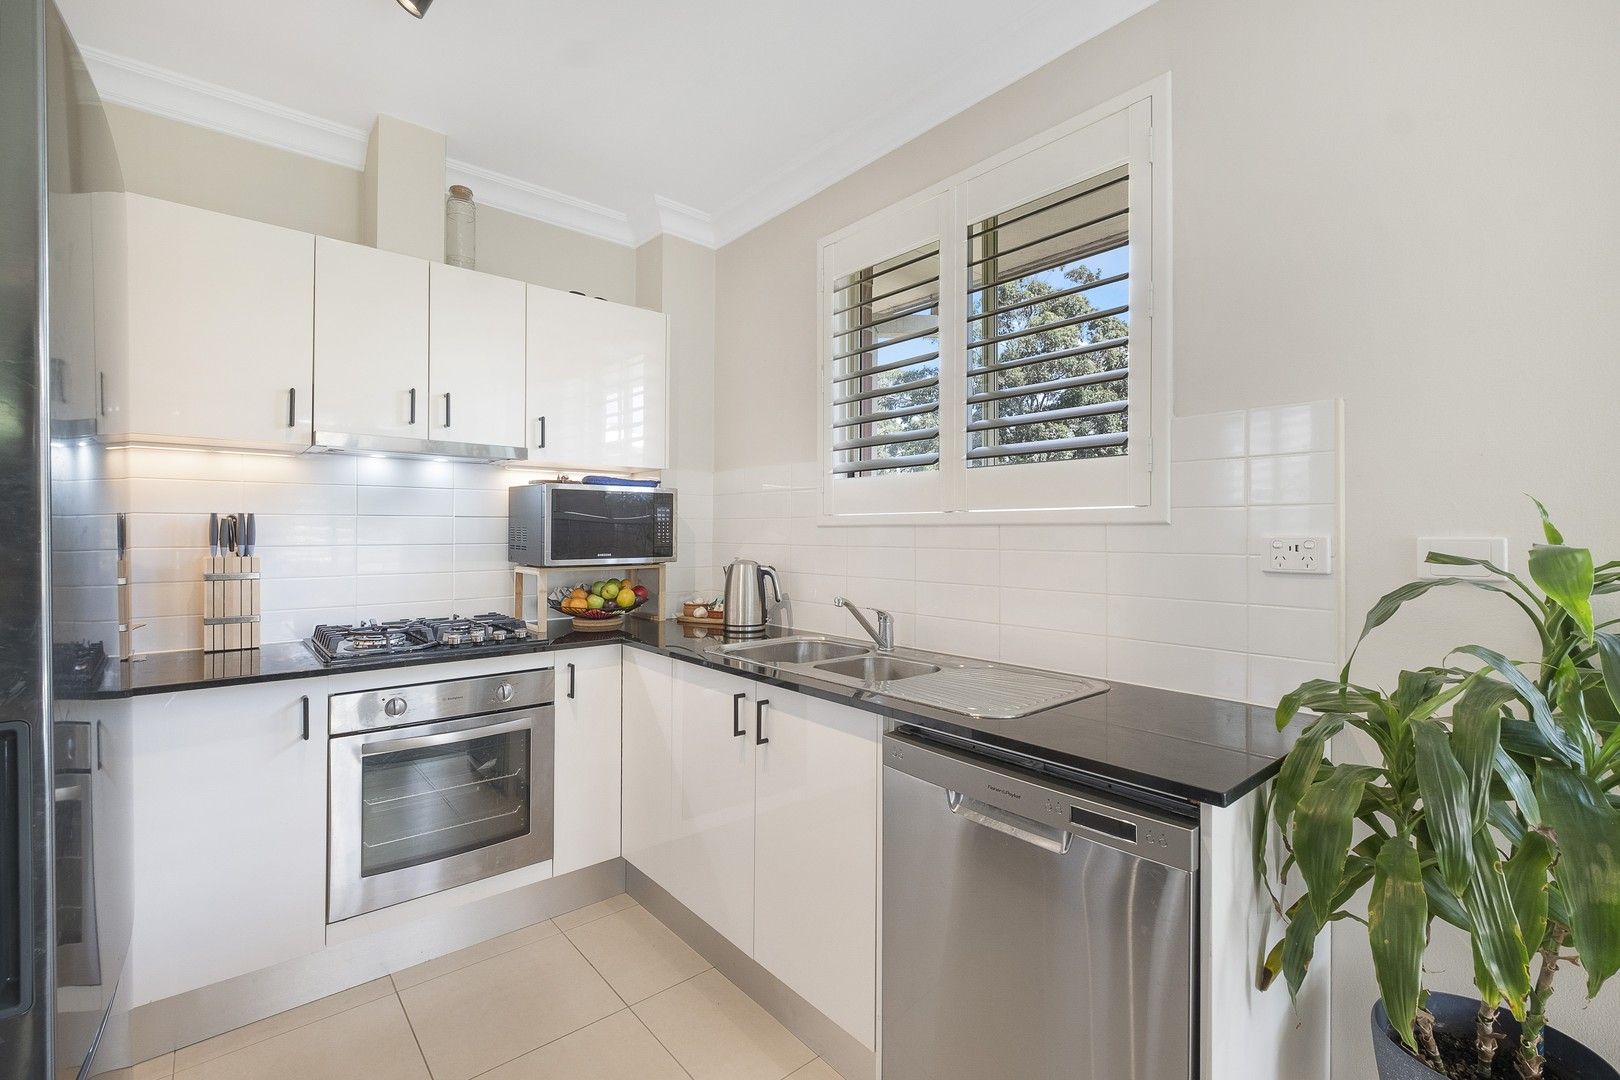 2 bedrooms Apartment / Unit / Flat in 23/7-11 Paton Street MERRYLANDS WEST NSW, 2160